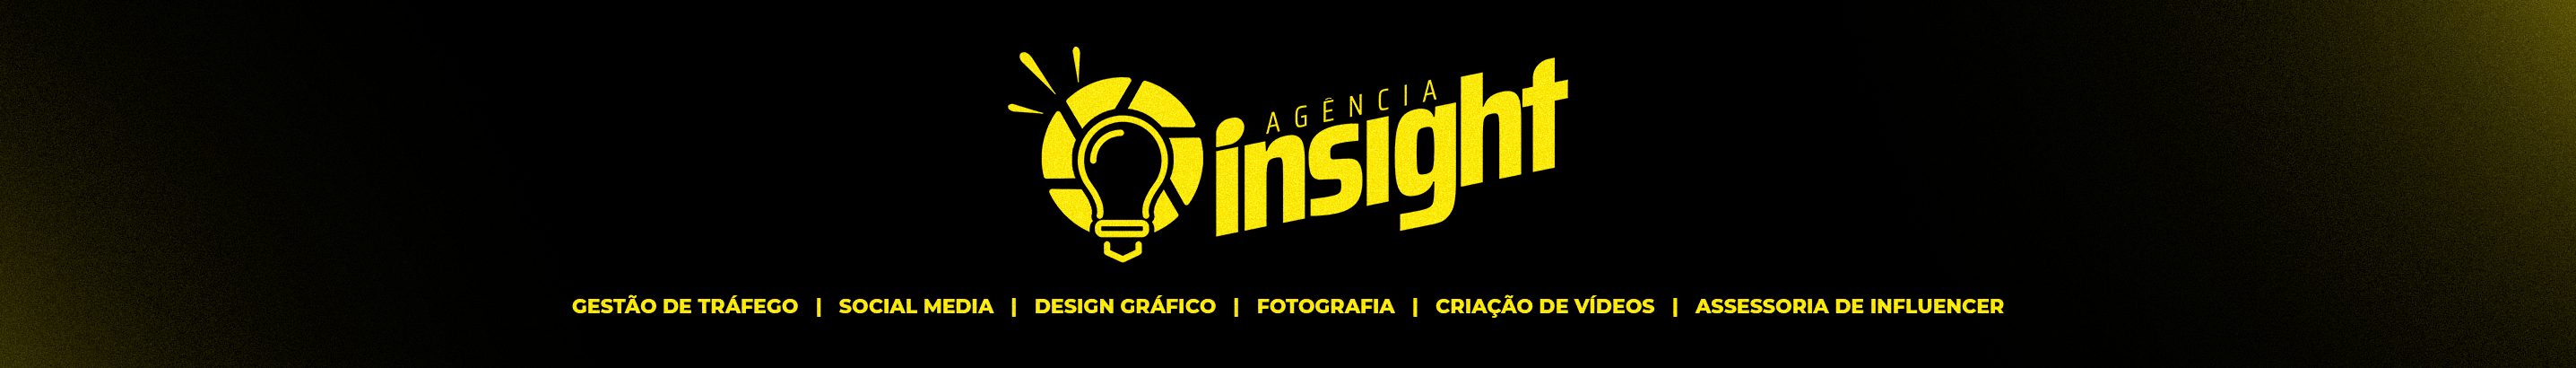 Agência Insight's profile banner